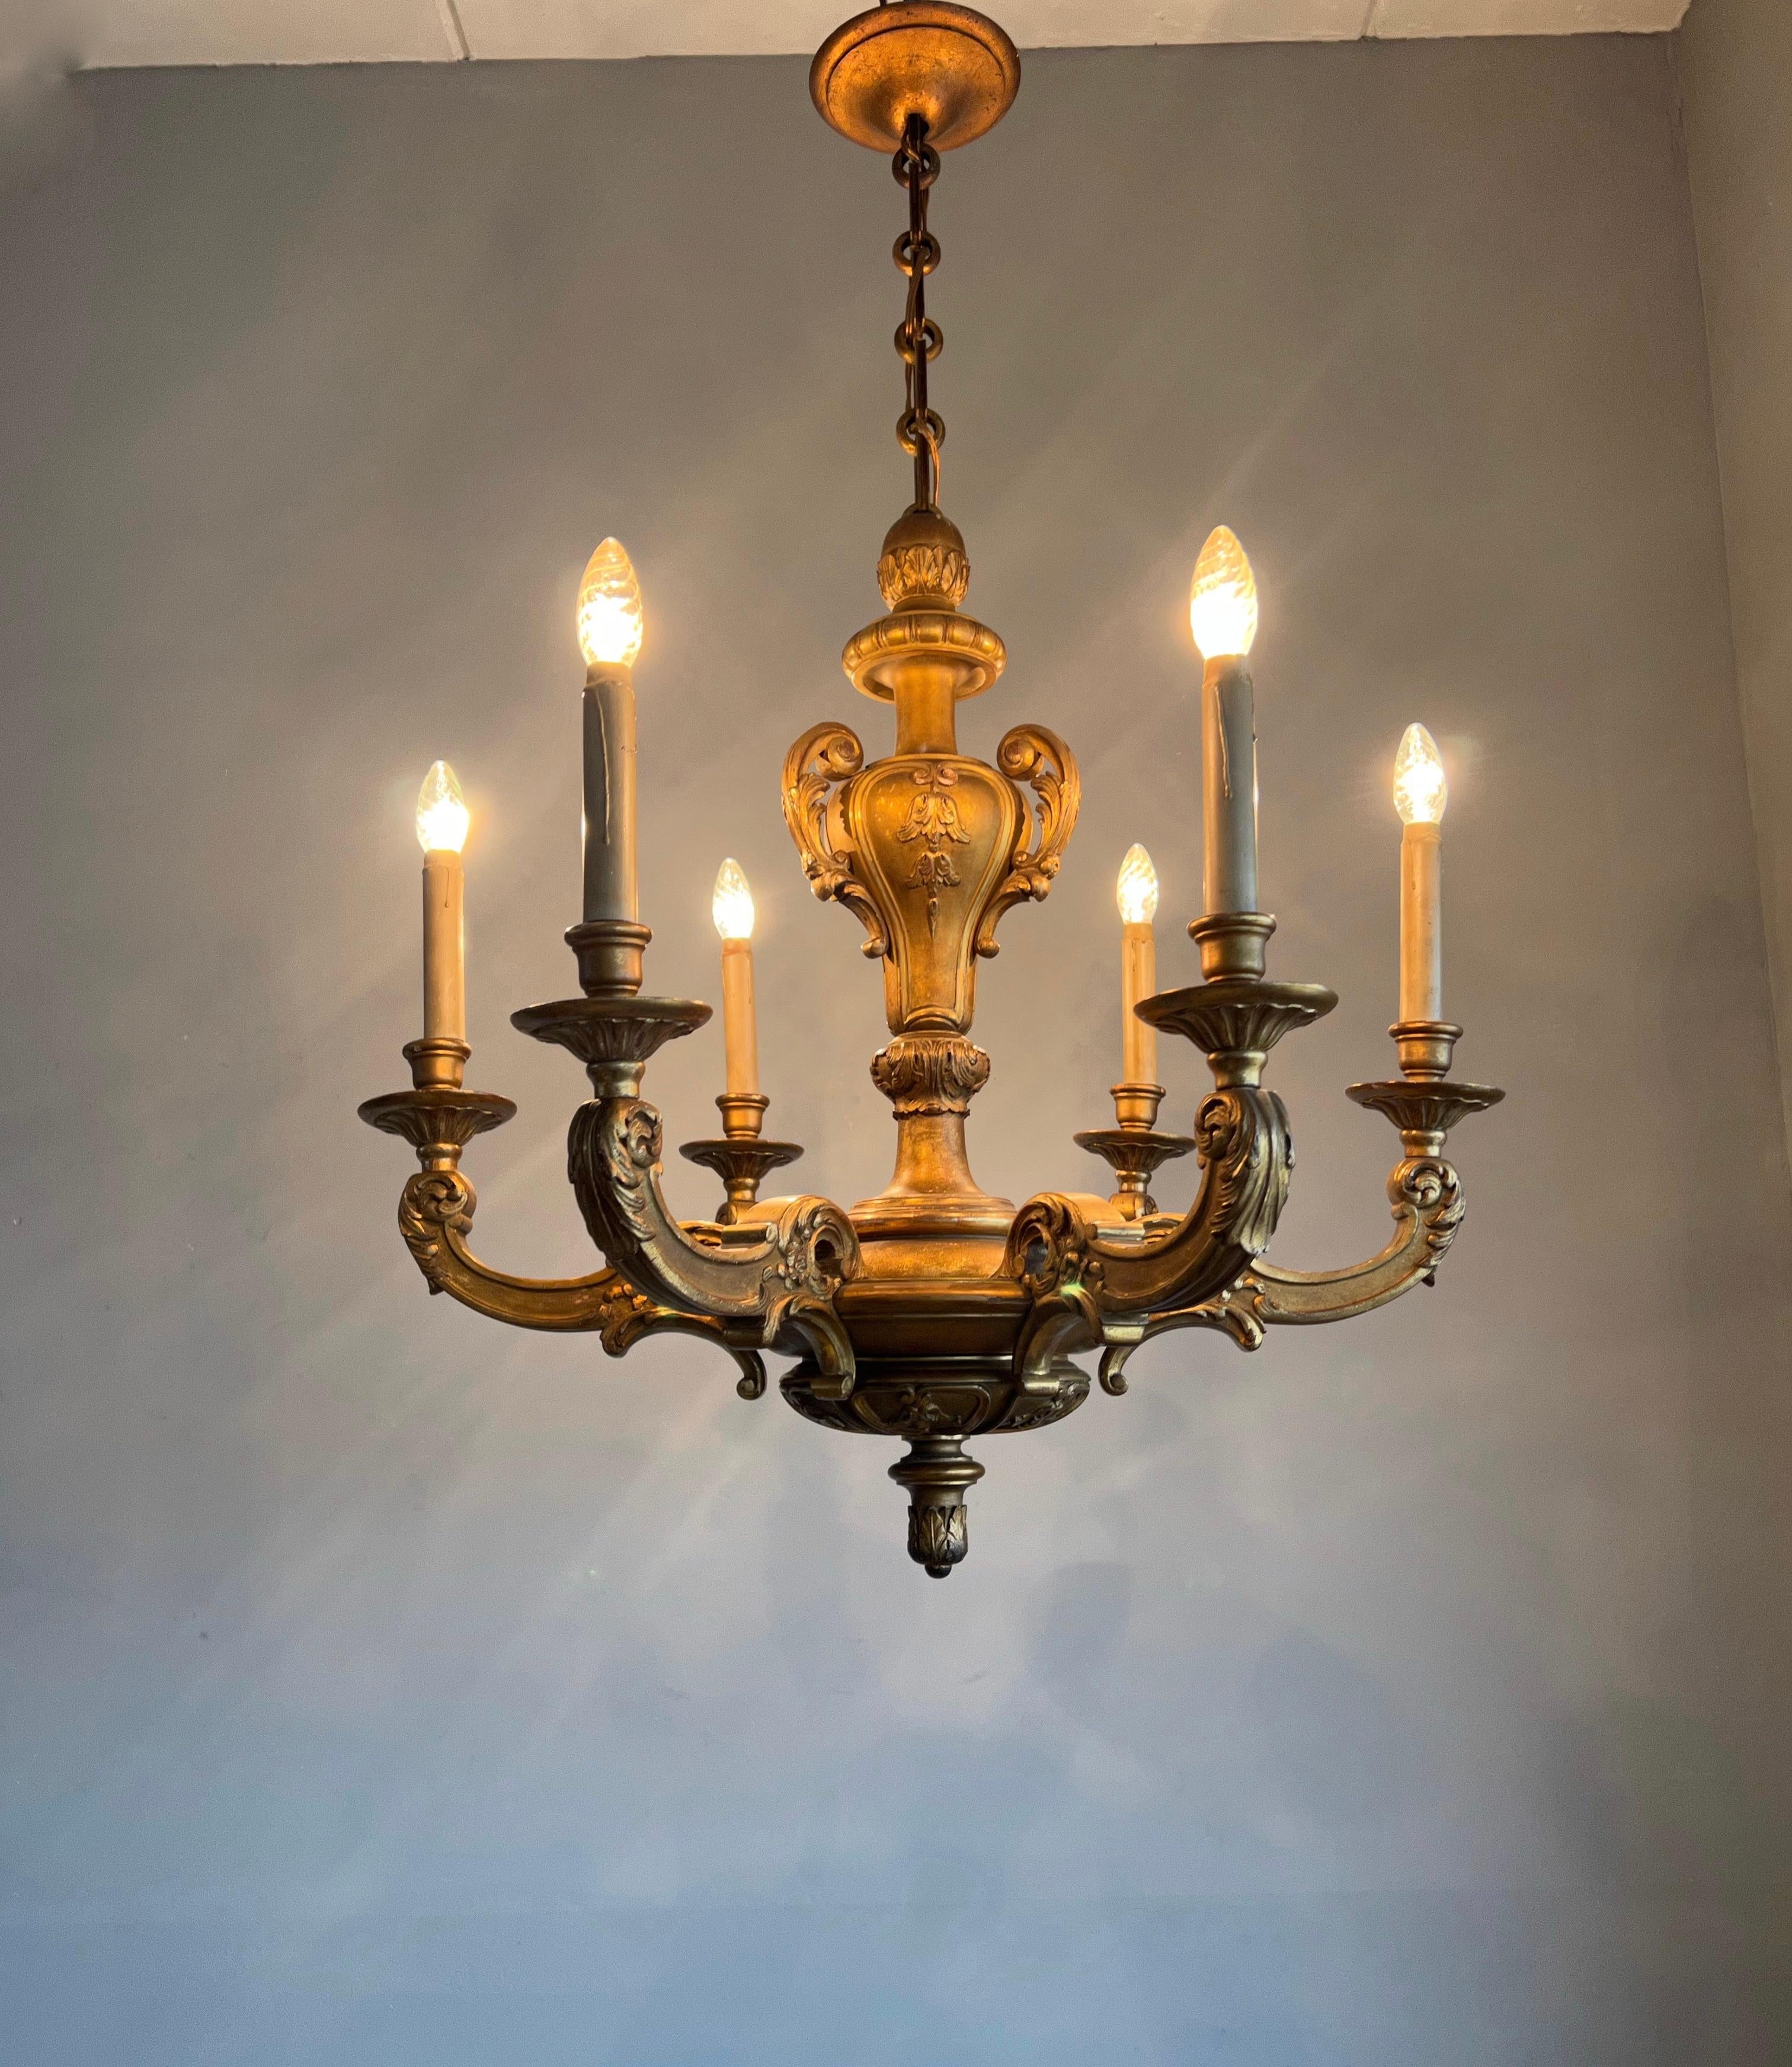 Early 1900s Art Nouveau Era Fine Quality Carved Gilt Chandelier Light Fixture For Sale 4